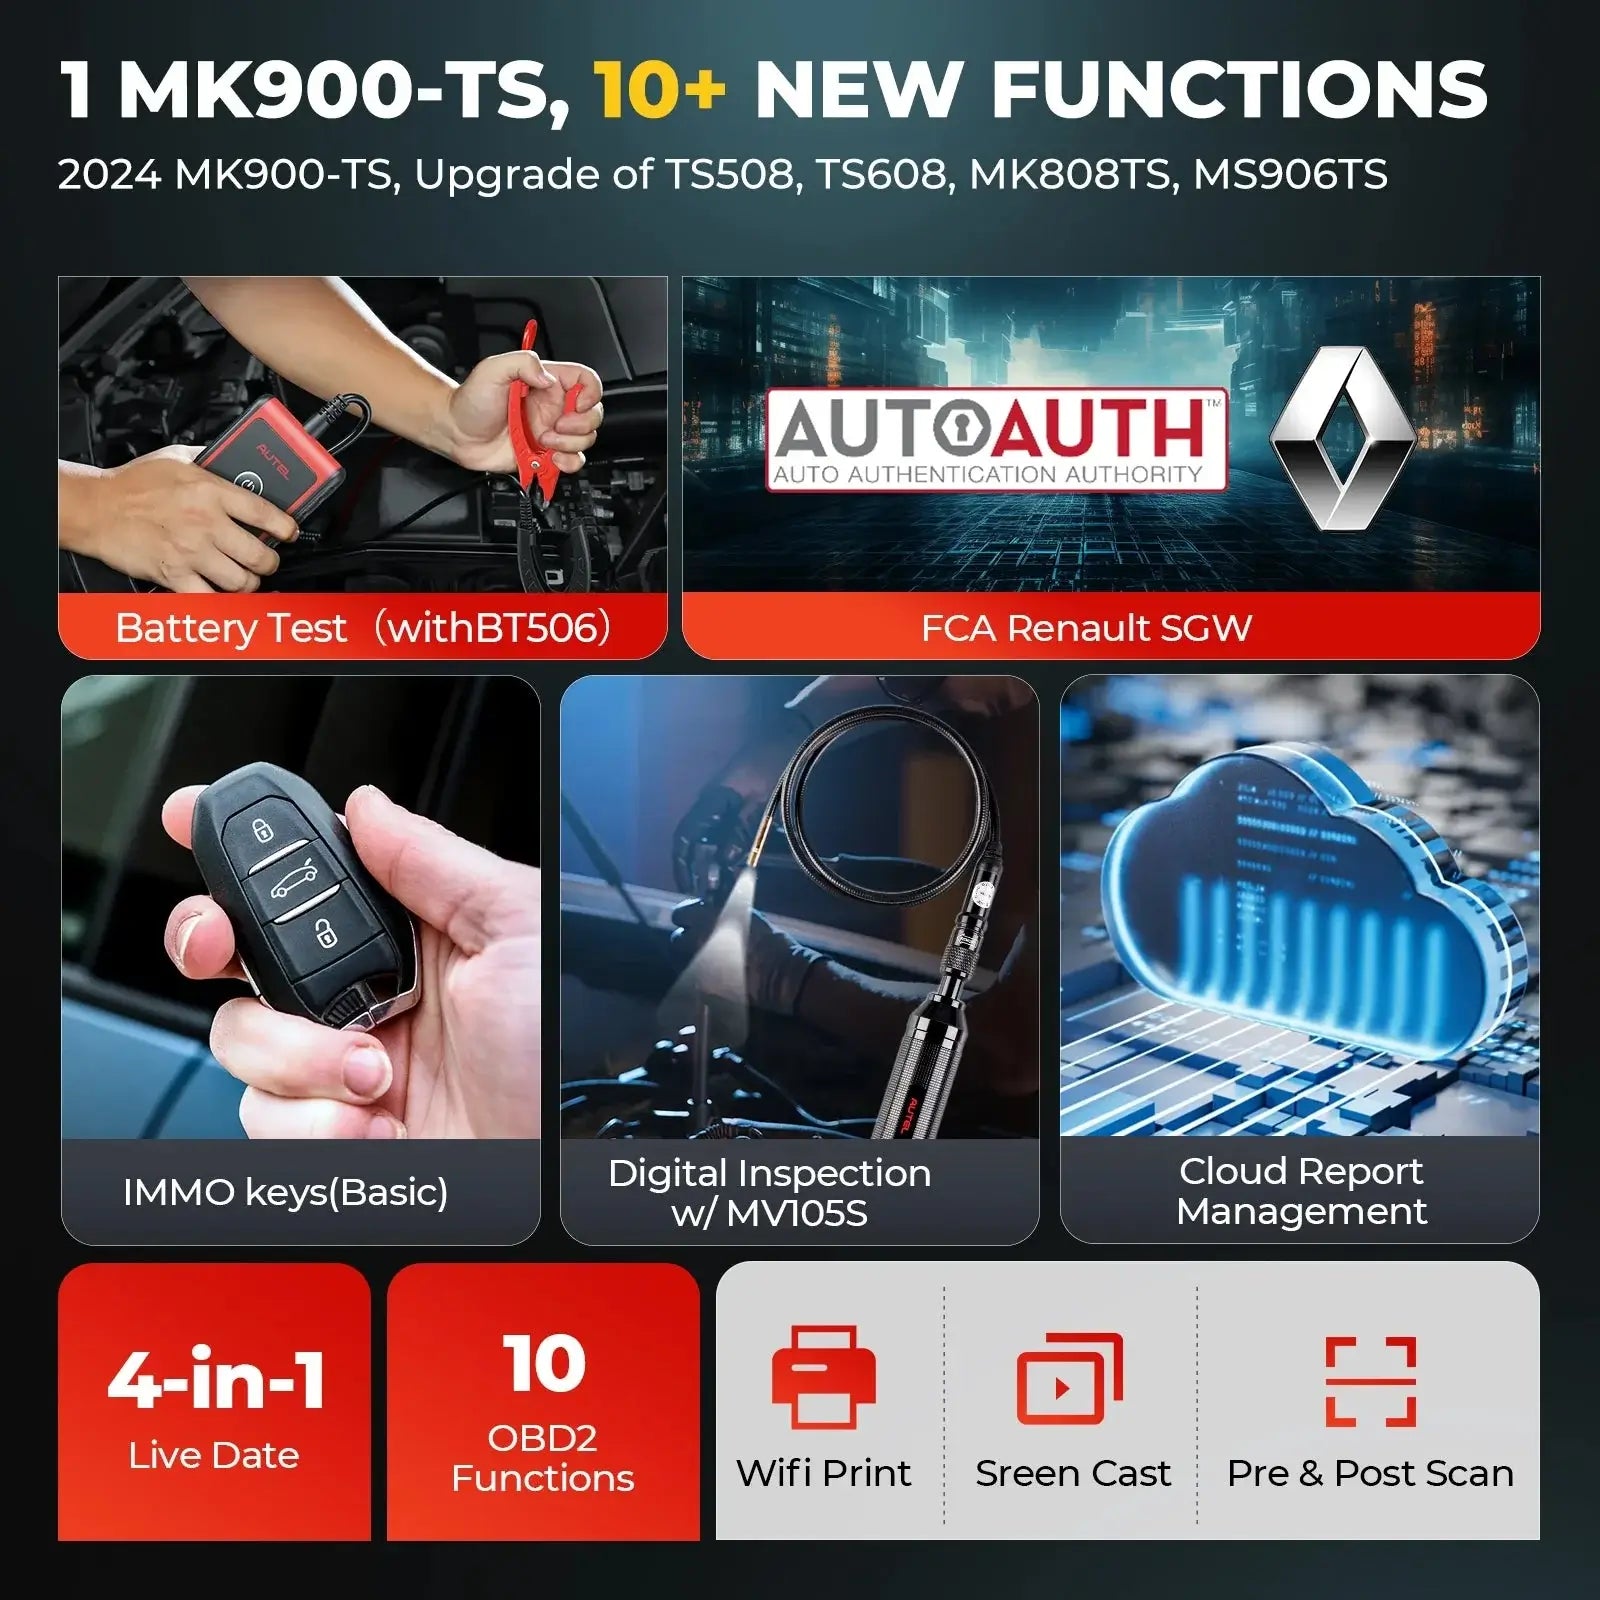 Autel MaxiCOM MK900-TS Diagnostic Scanner Bidirectional Full TPMS Tool DoIP/CAN FD 8 Inch Scan Tools 2024 Updated MK808S-TS - Dynamex